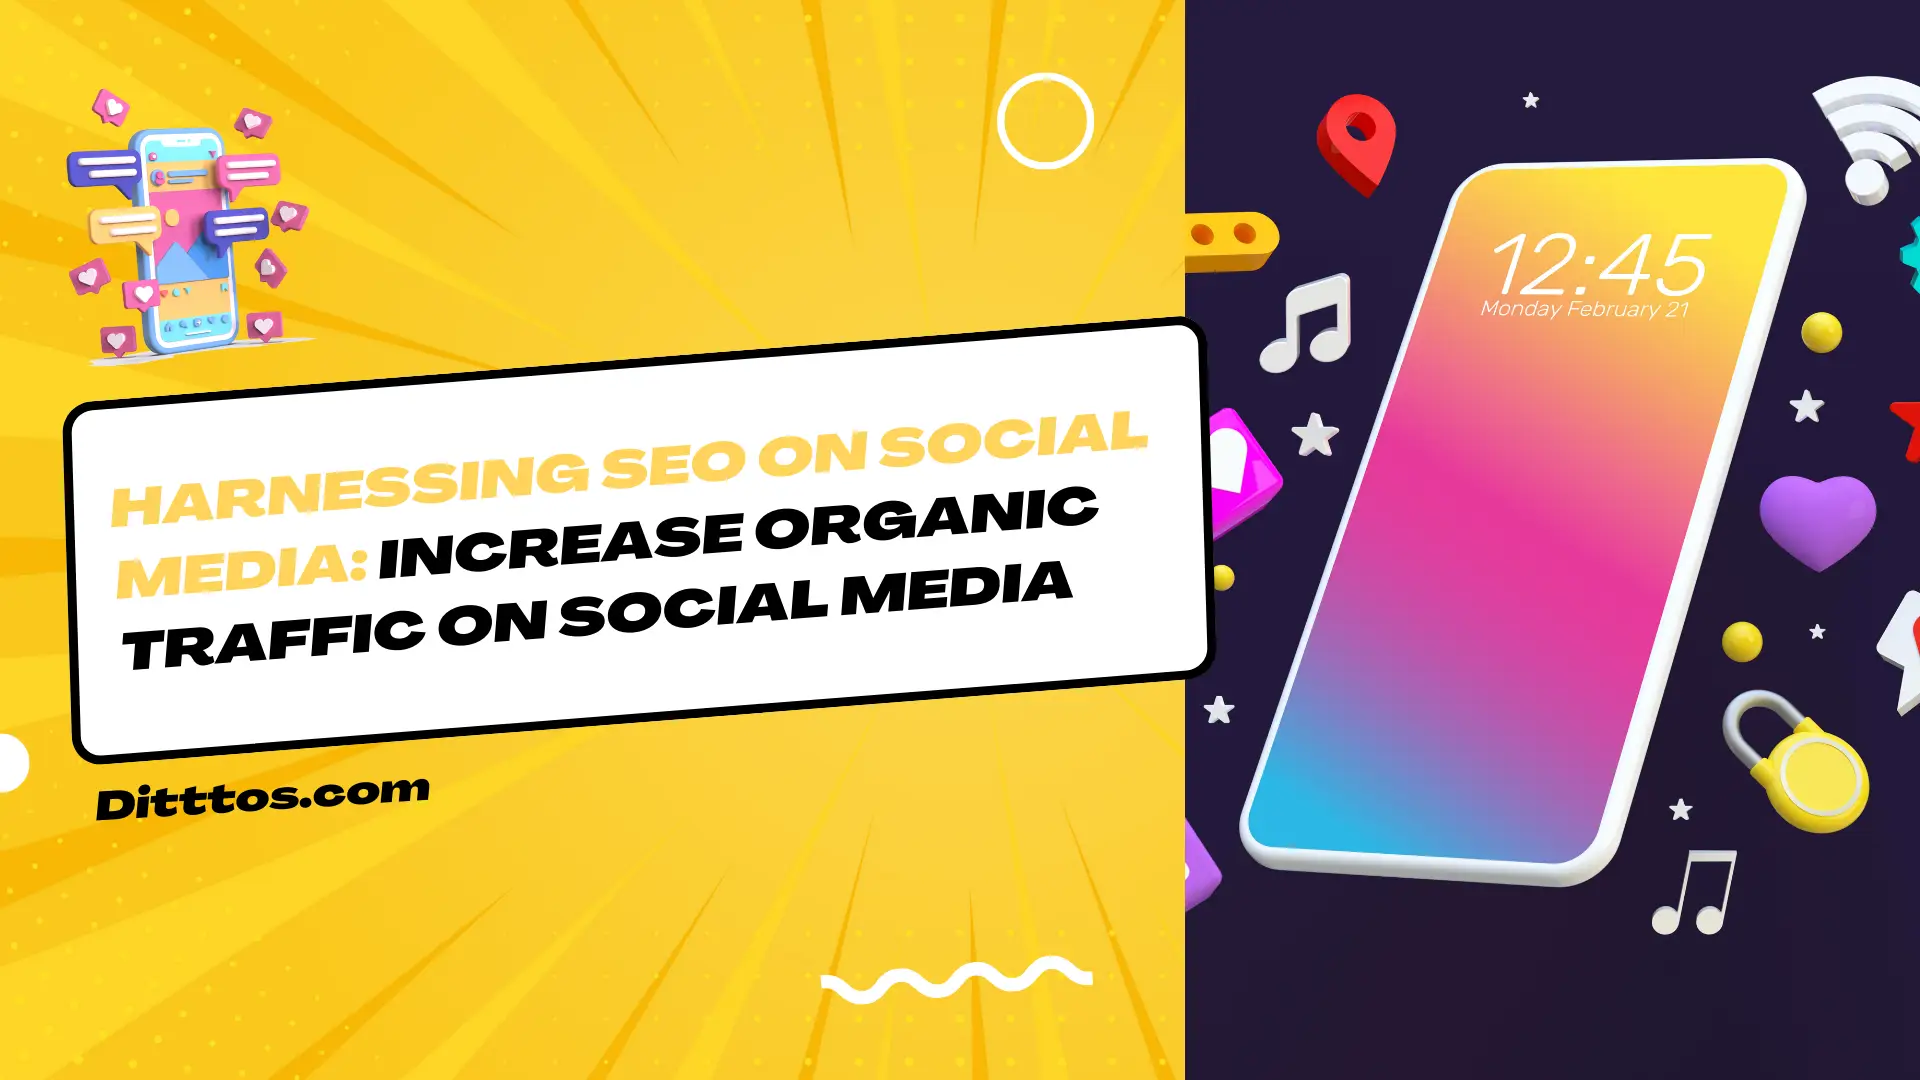 Harnessing SEO on Social Media: Increase Organic Traffic on Social Media